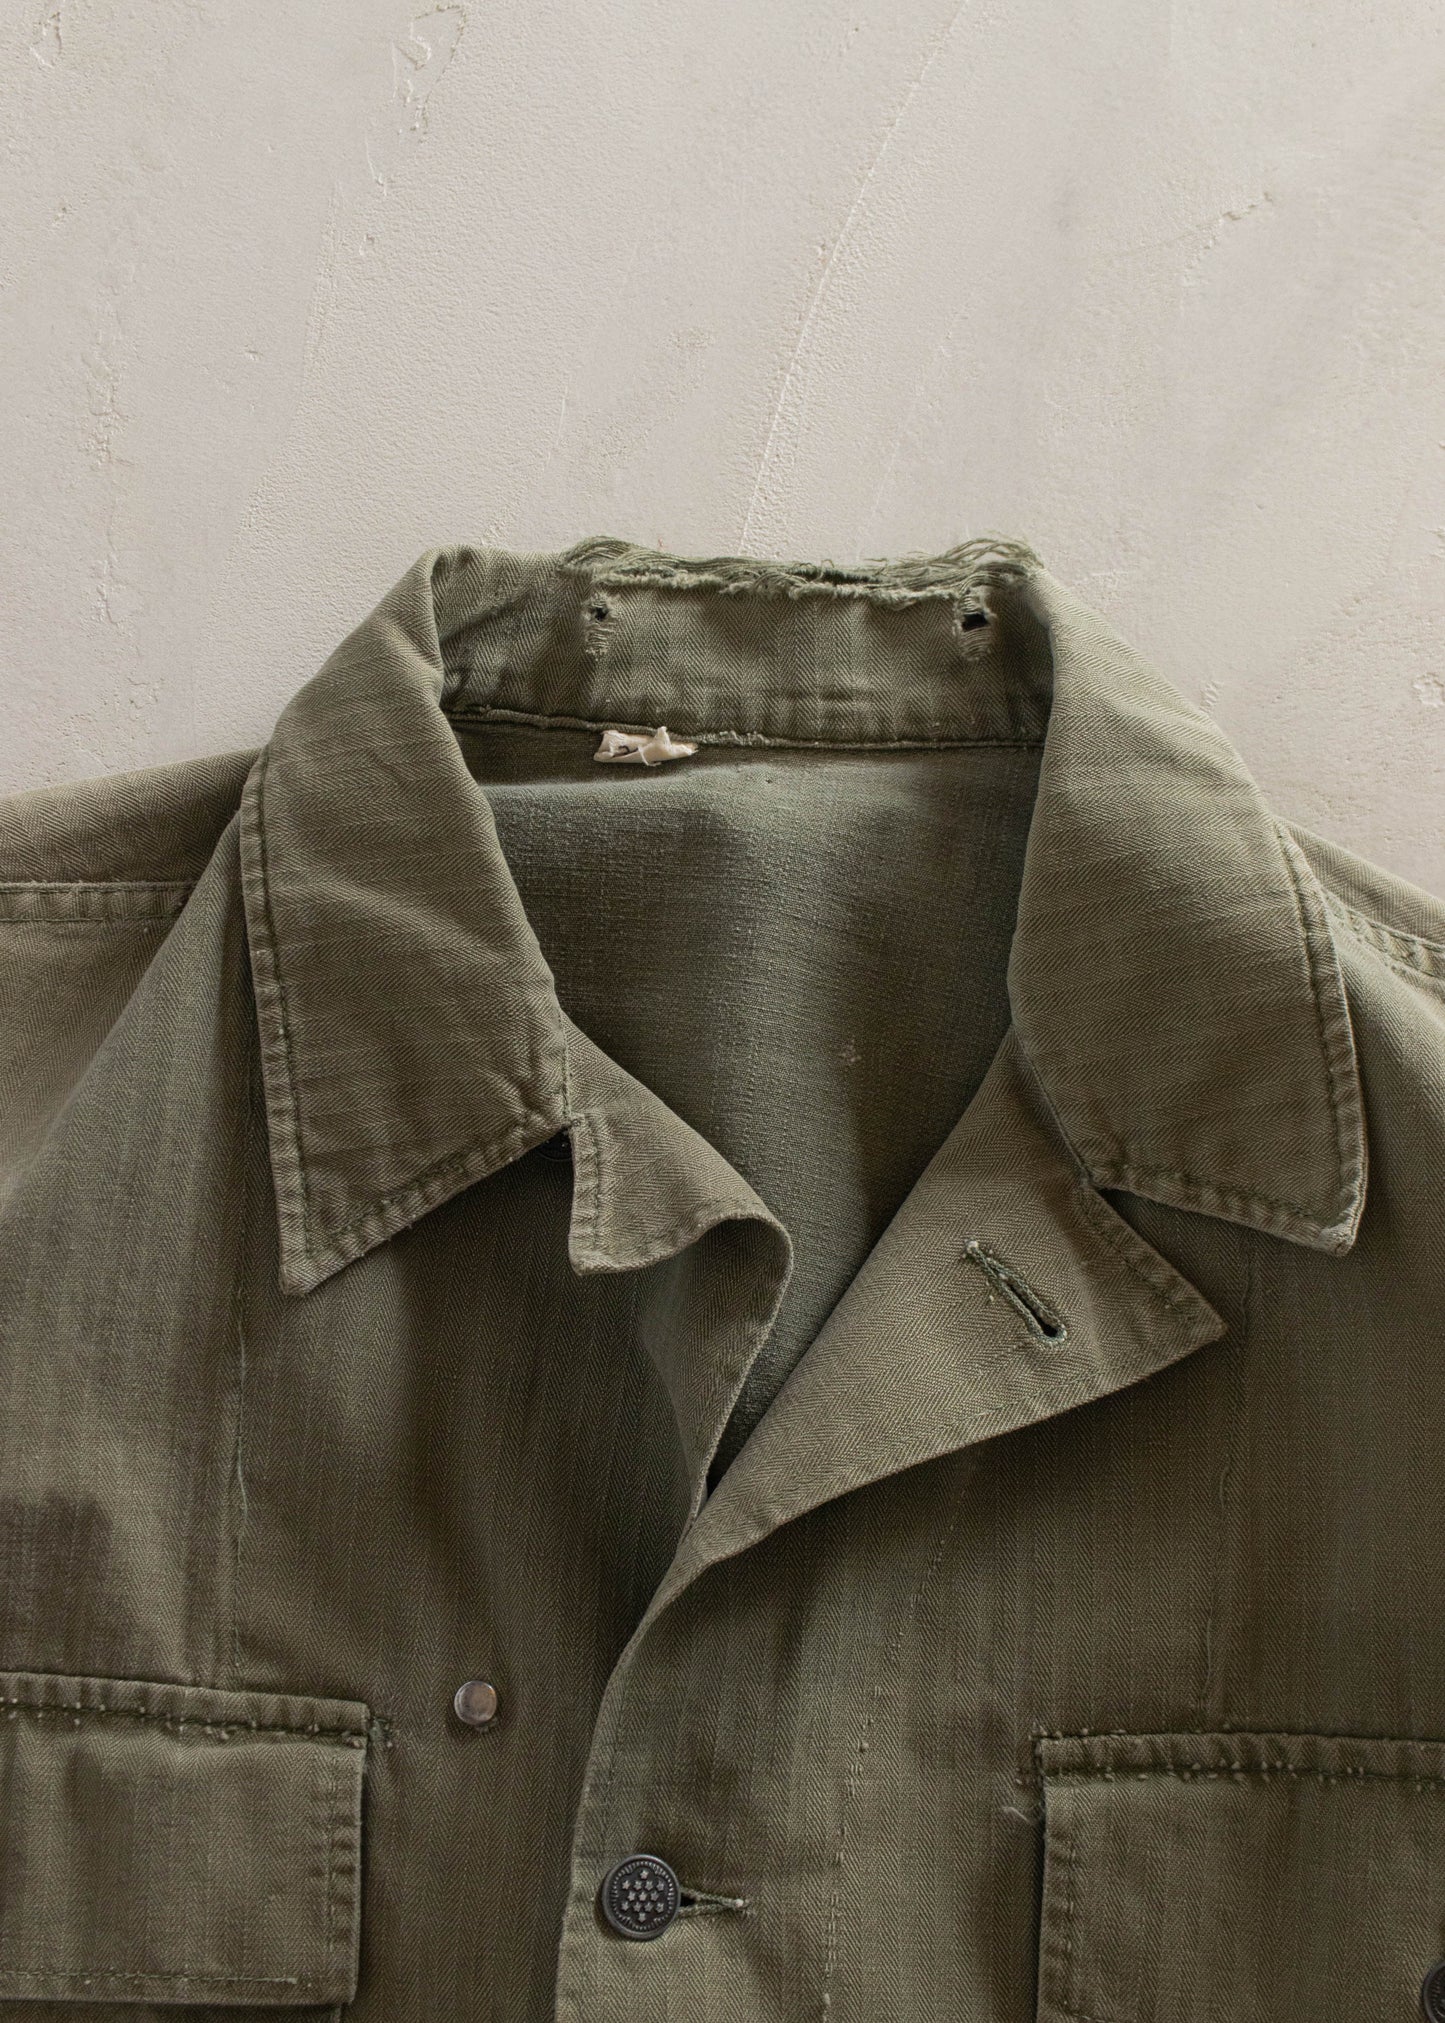 Vintage 1940s WWII Herringbone Twill 13 Star Fatigue Shirt Size XL/2XL